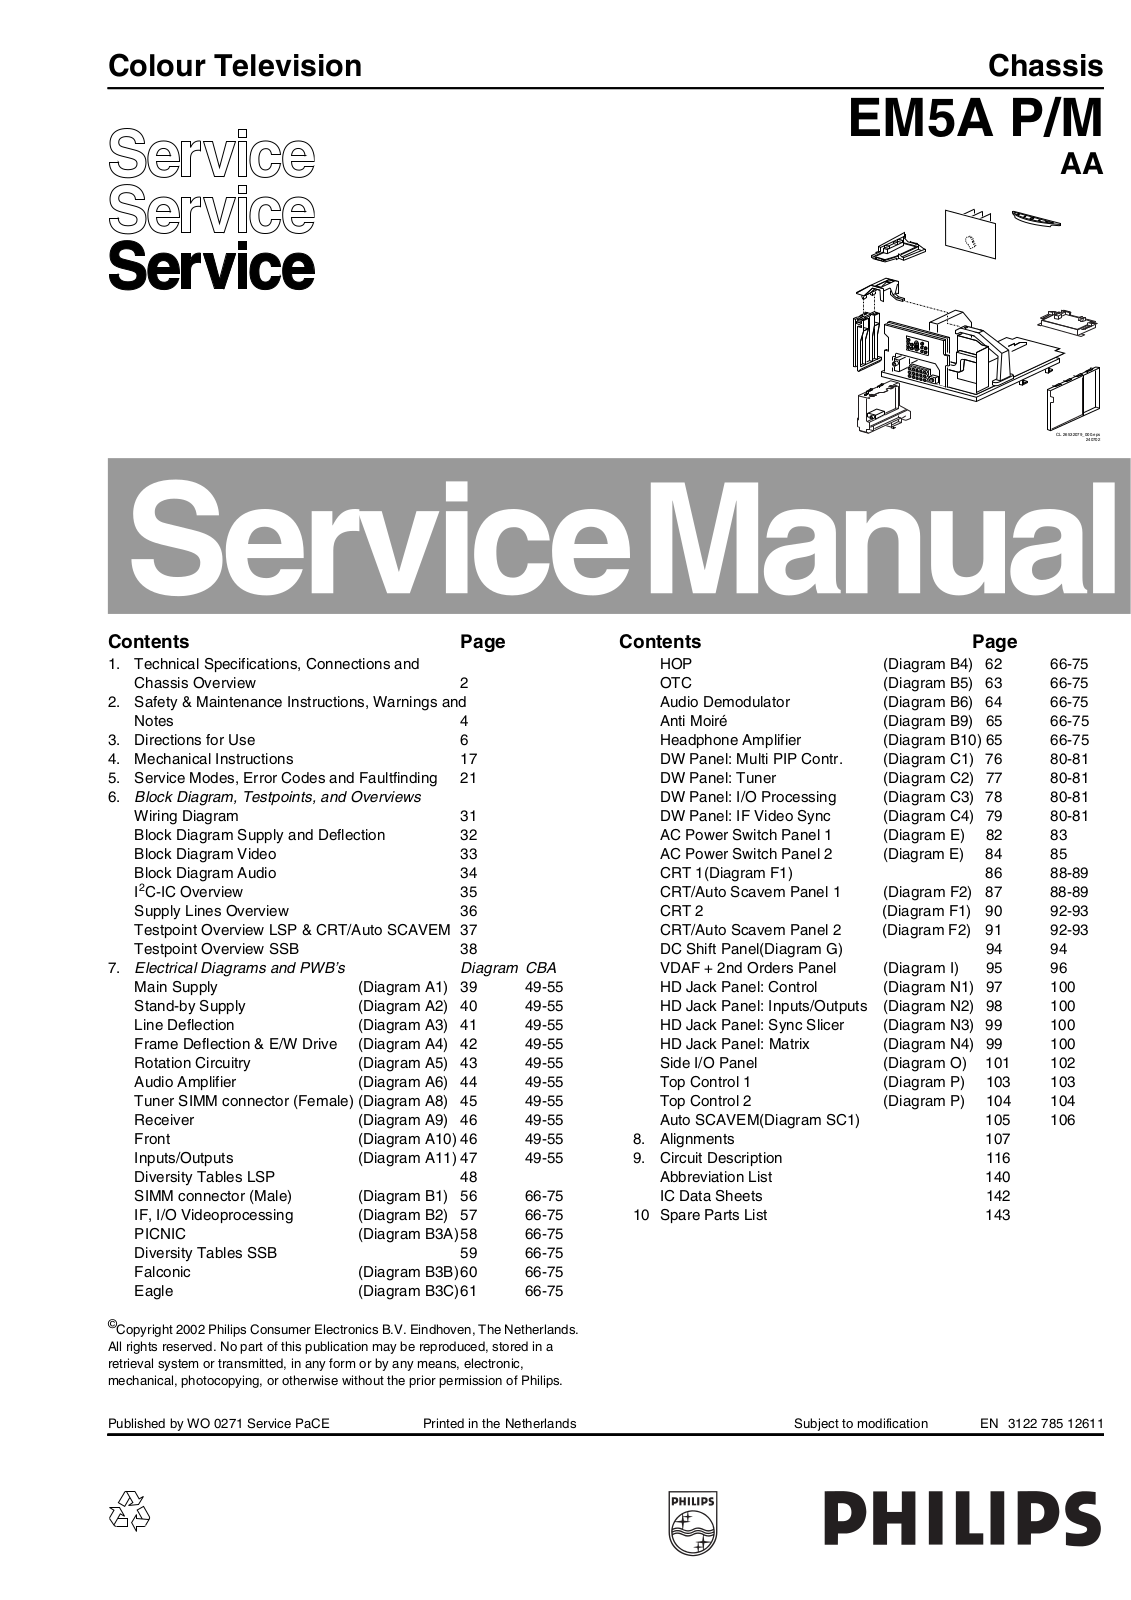 Philips EM5A P-M AA Service Manual